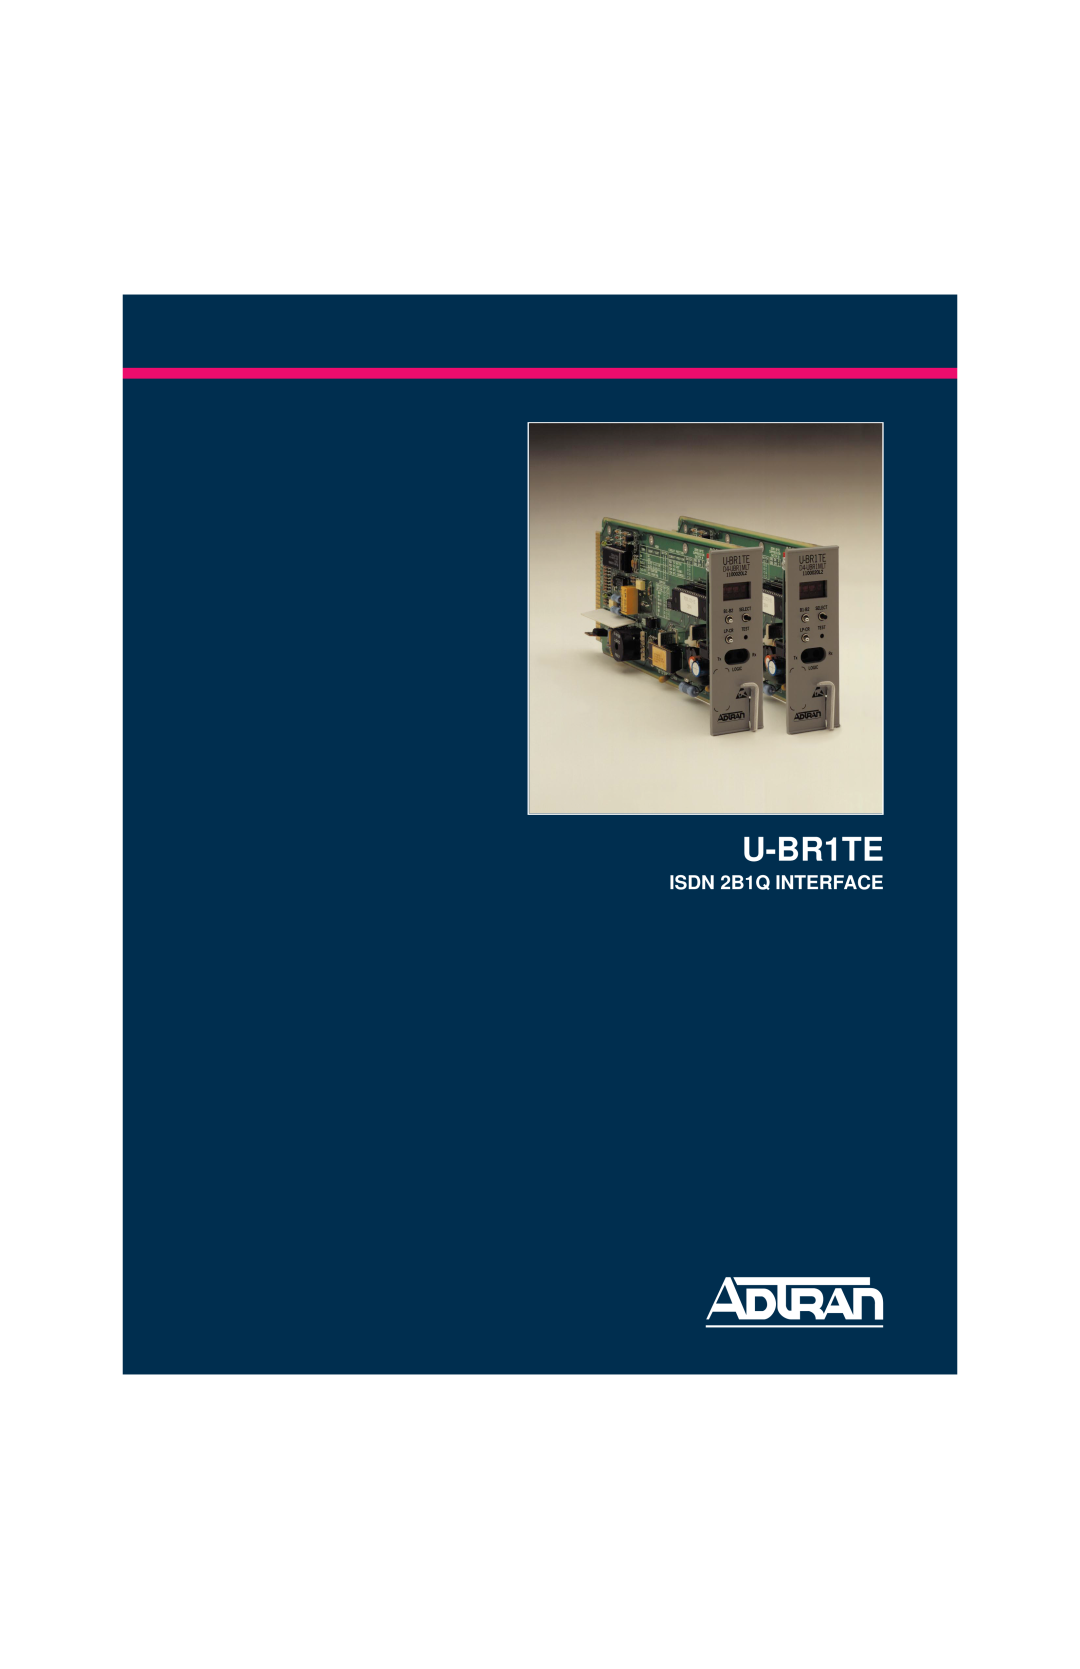 ADTRAN manual U-BR1TE, ISDN 2B1Q INTERFACE 